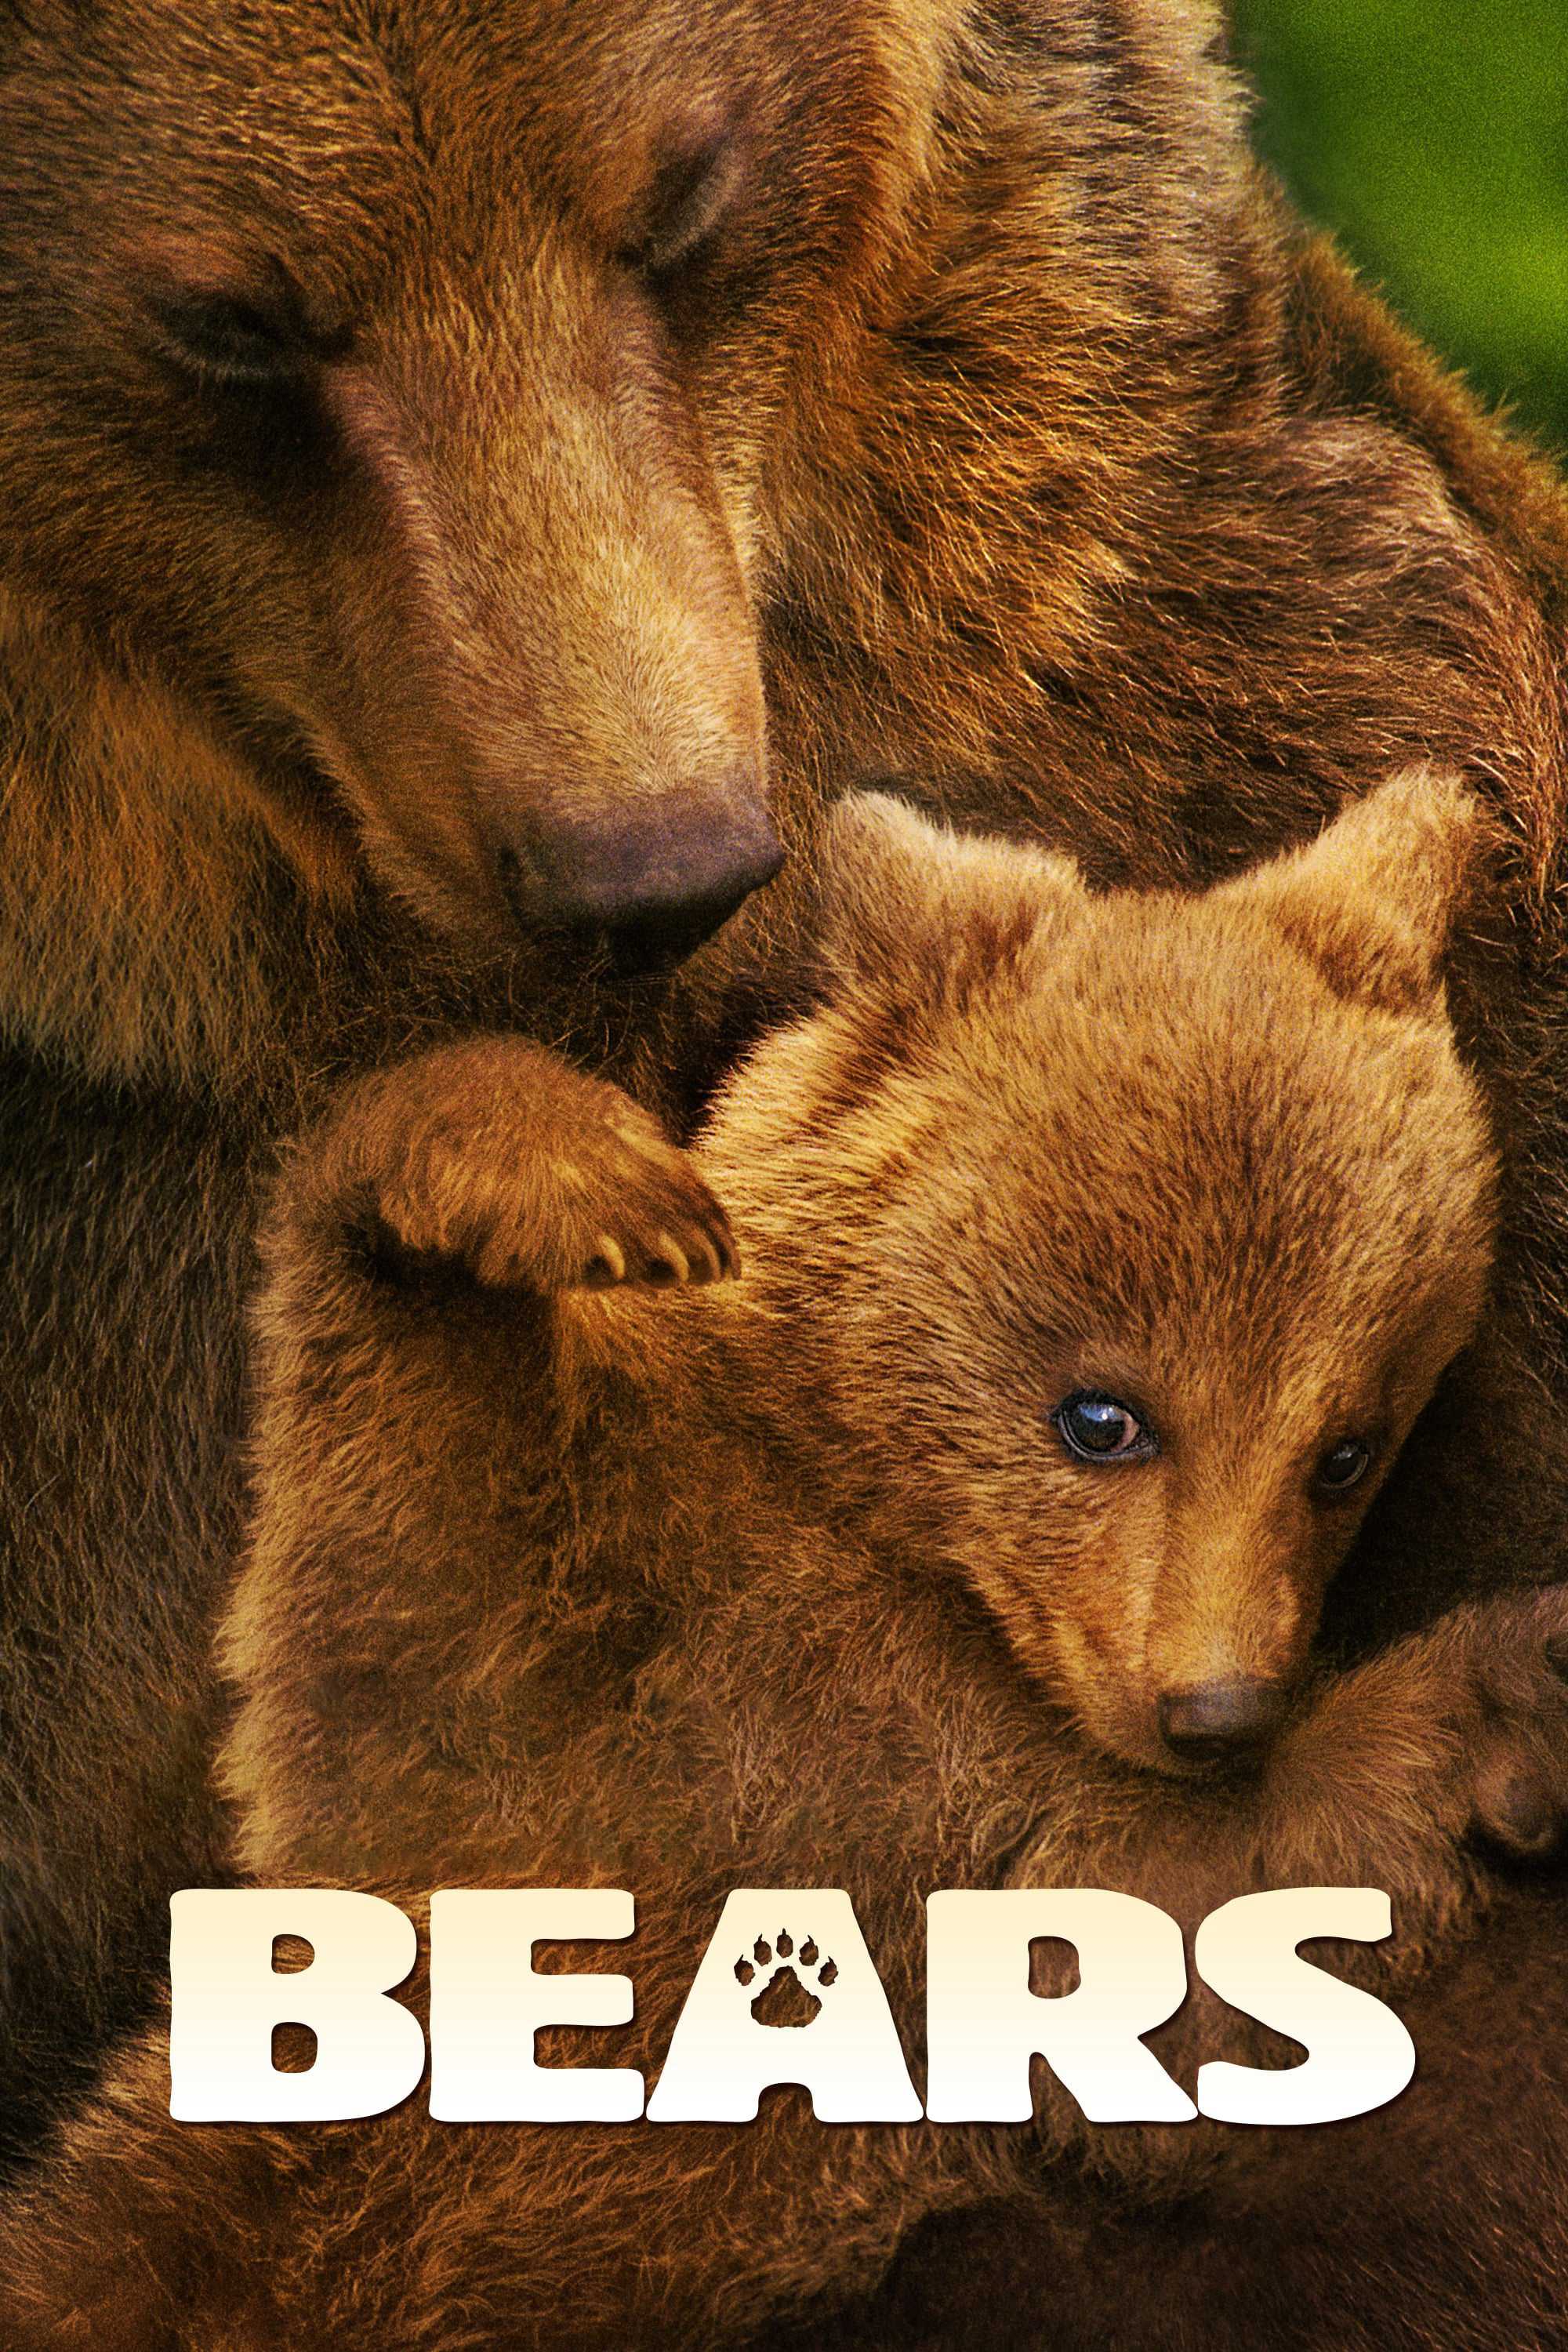 Bears - Bears